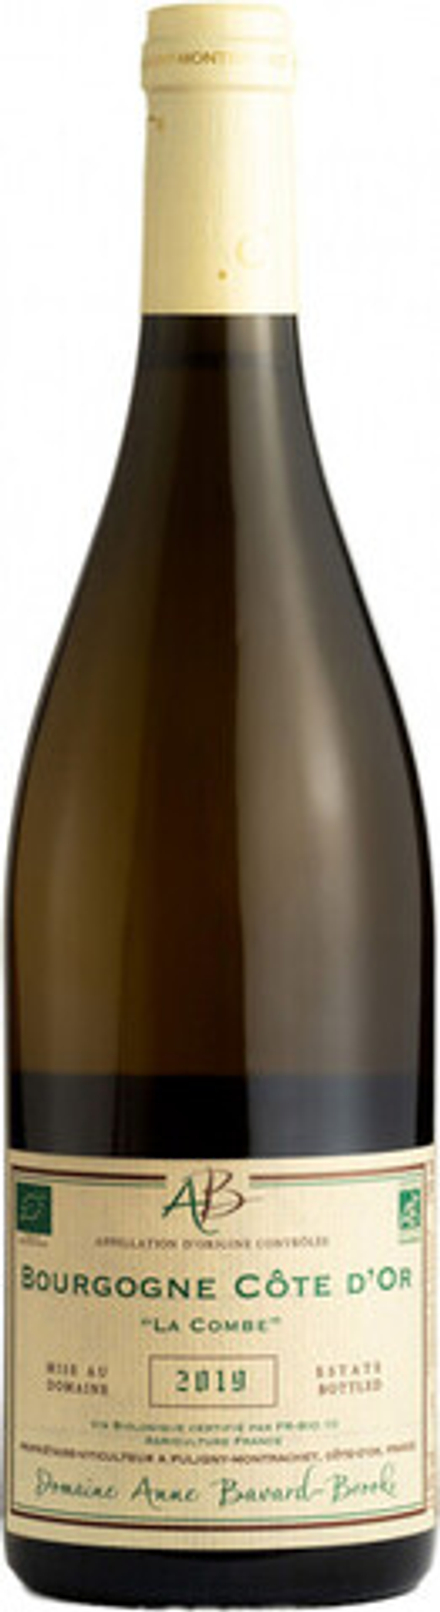 Вино Domaine Anne Bavard-Brooks, Bourgogne Cote d'Or "La Combe" АОC, 0,75 л.